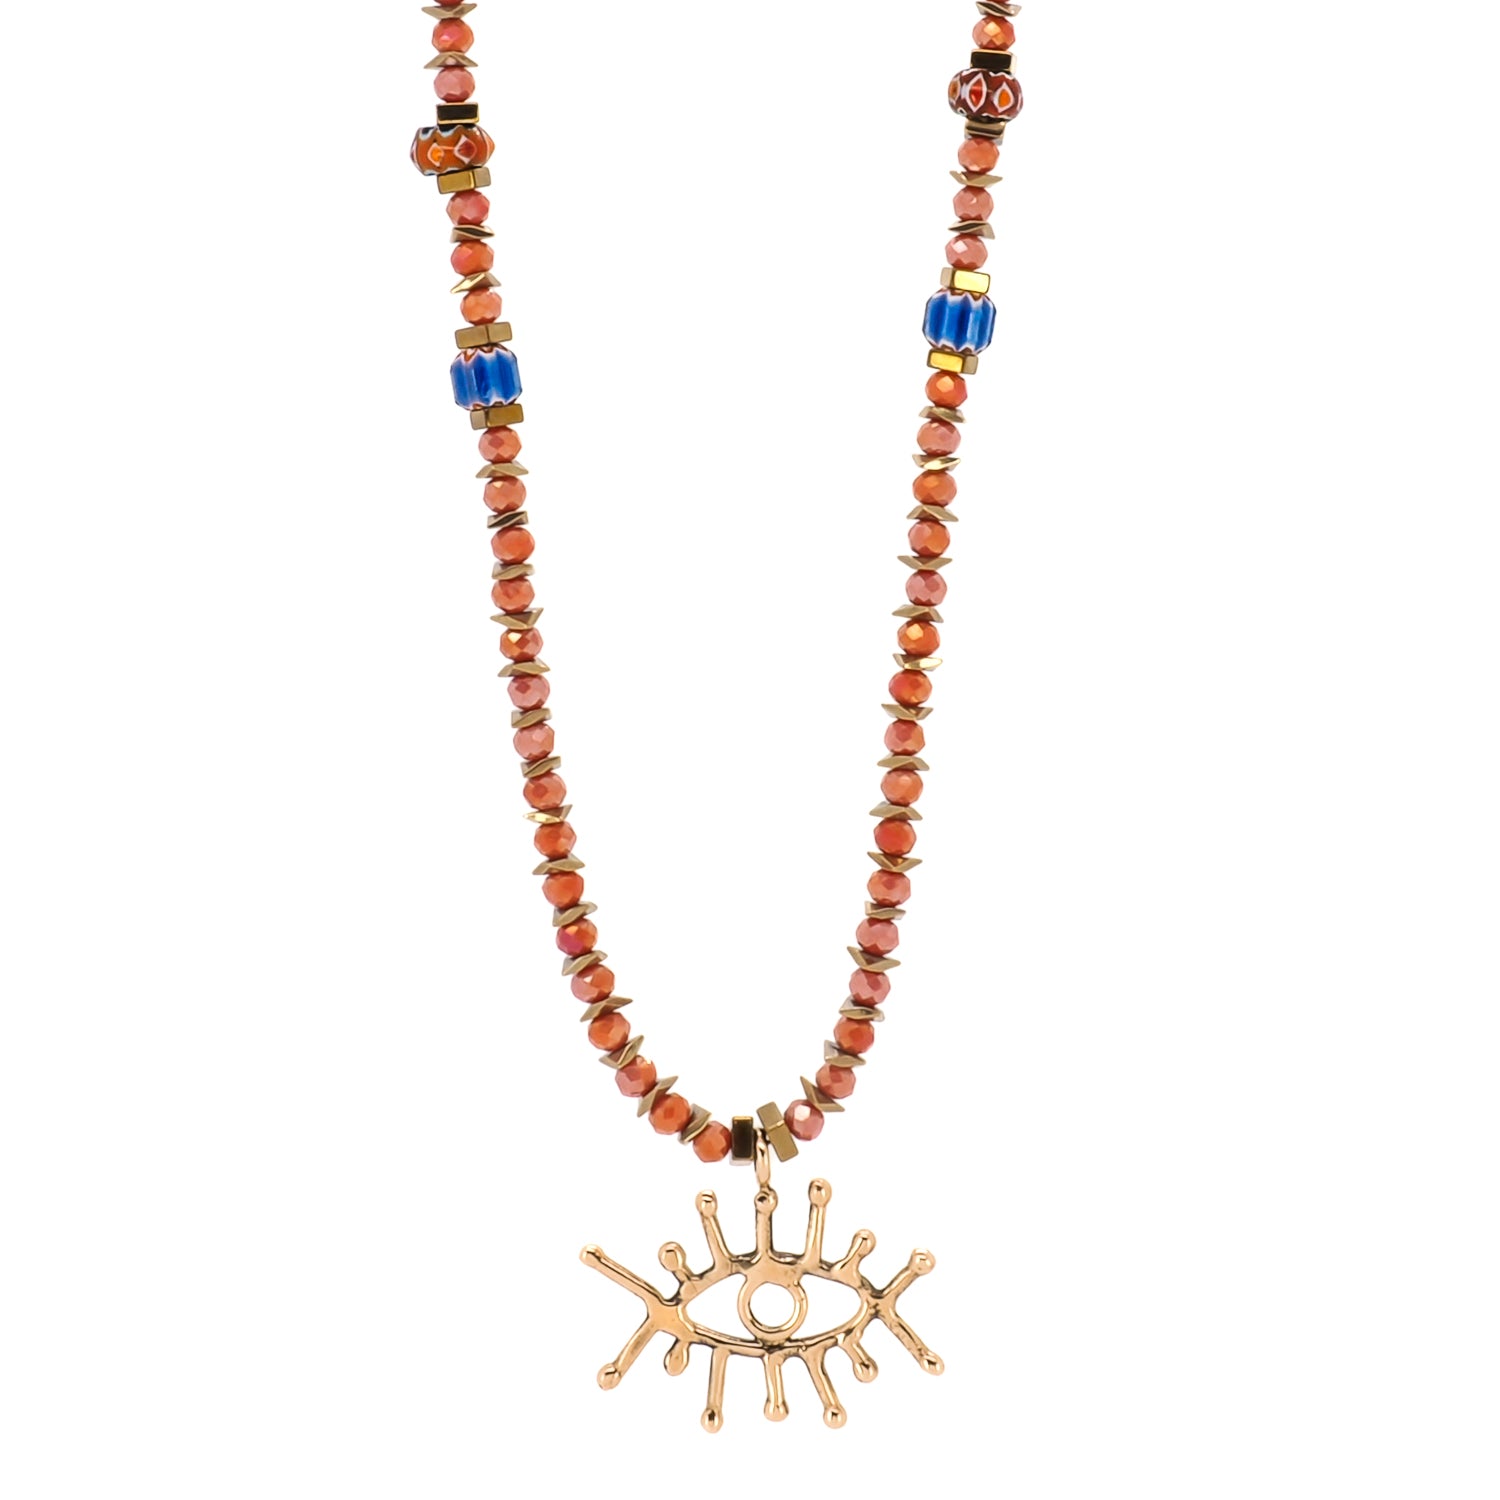 Handmade necklace featuring orange crystal beads, gold hematite stone beads, and bronze evil eye pendant